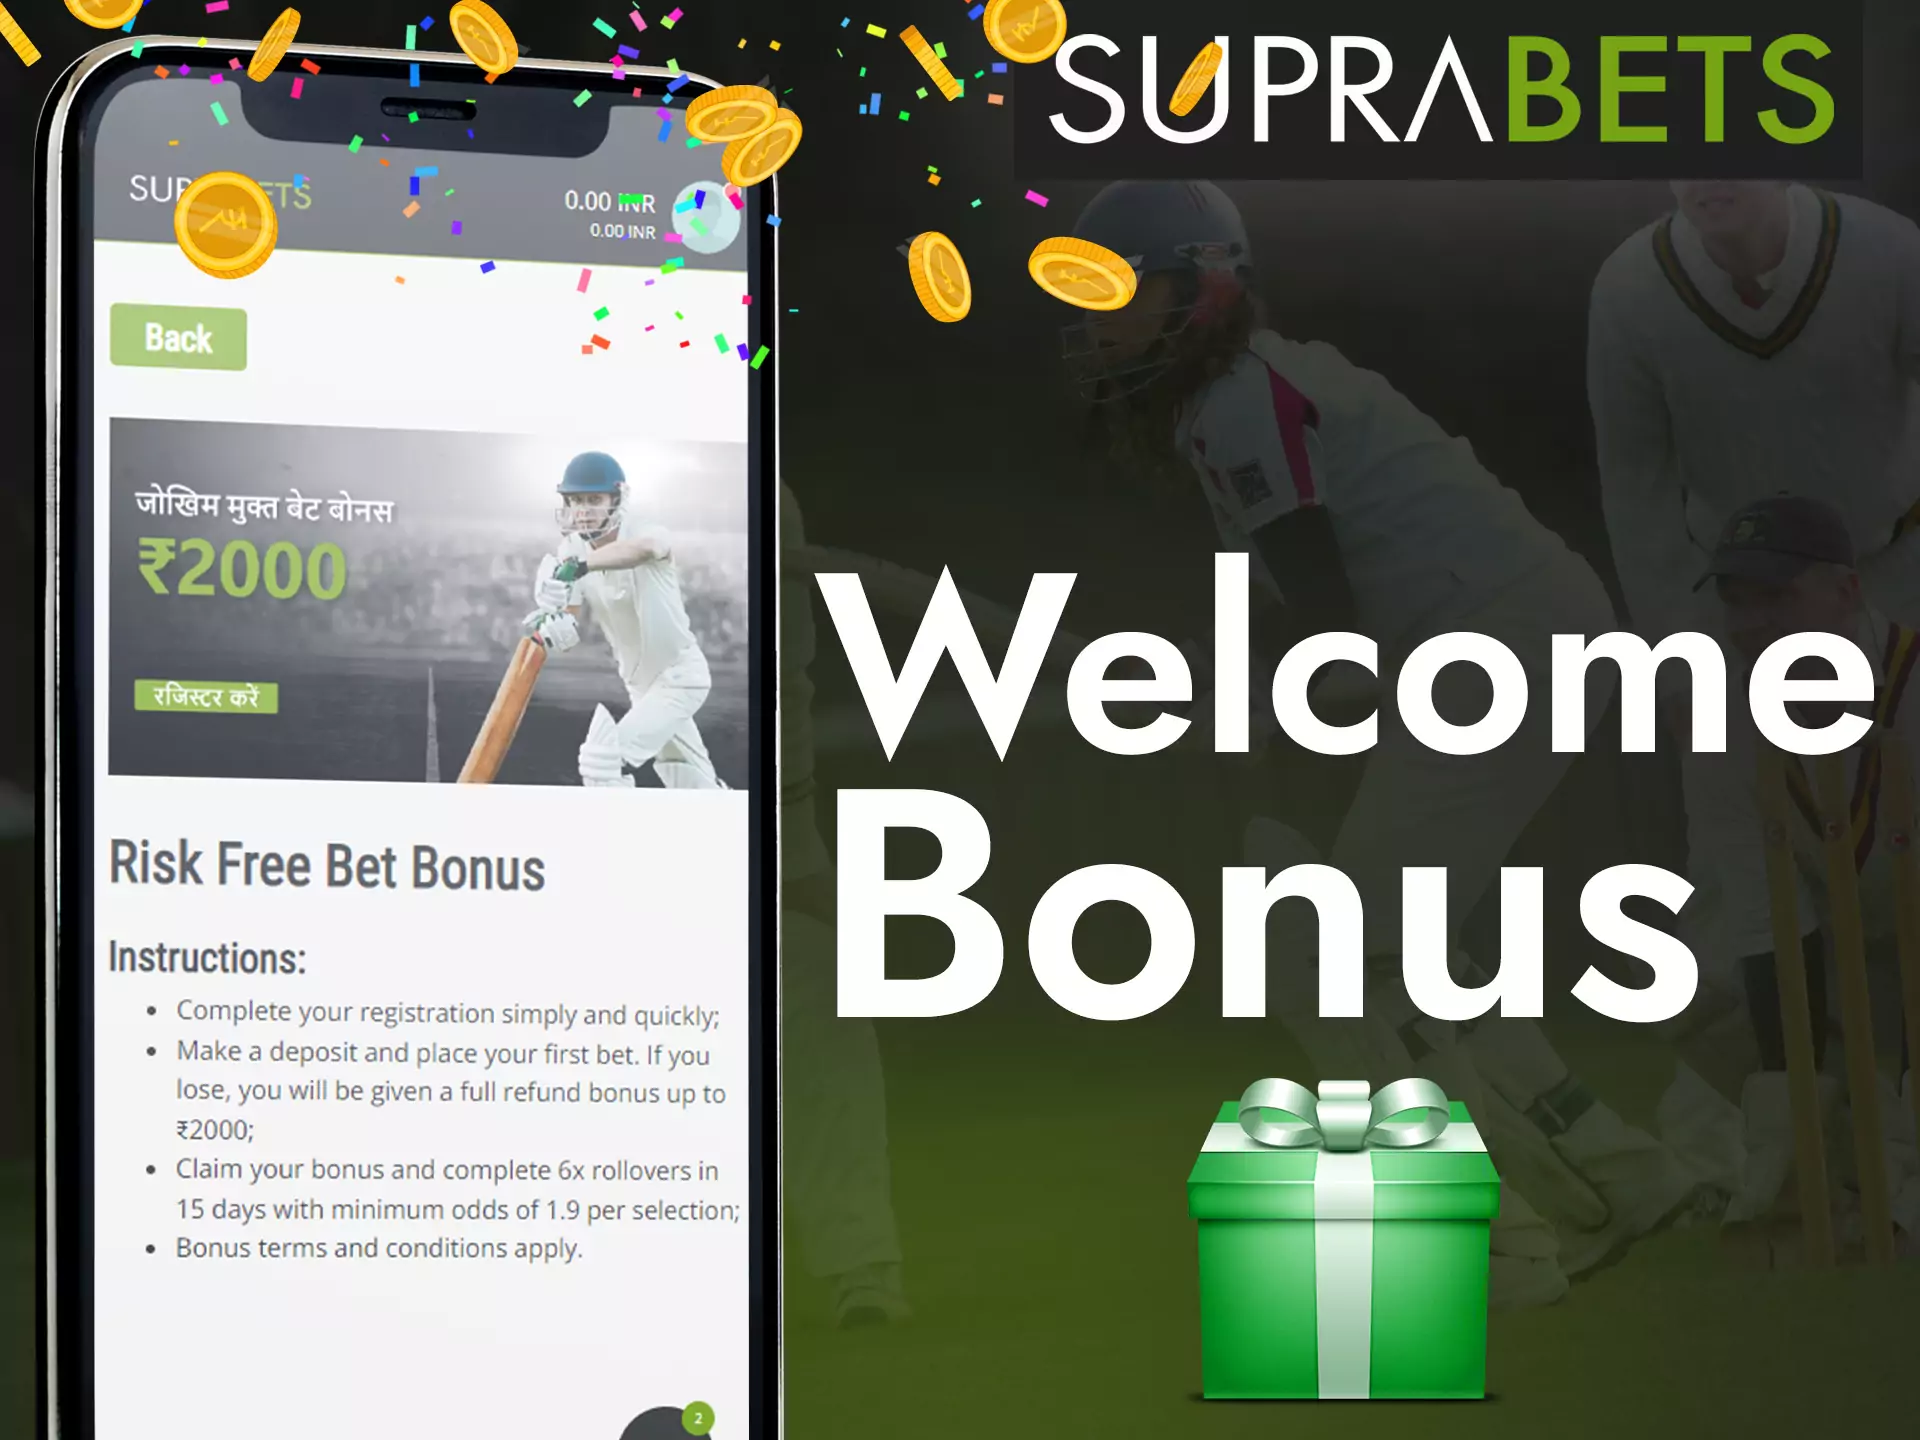 Get a special Suprabets Welcome bonus right after registration.